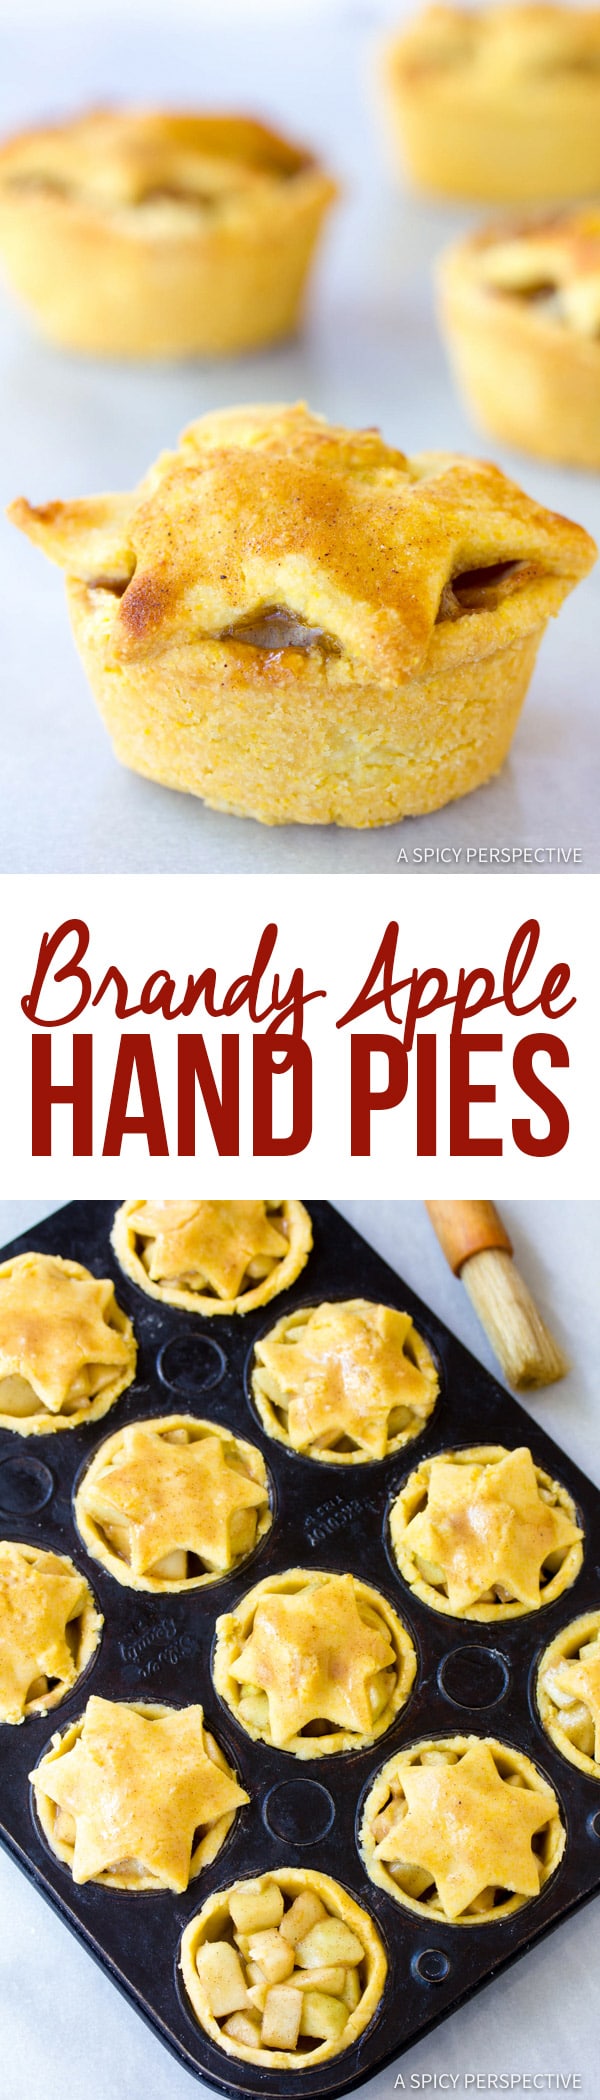 Brandy Apple Hand Pies with Cornmeal Crust | ASpicyPerspective.com